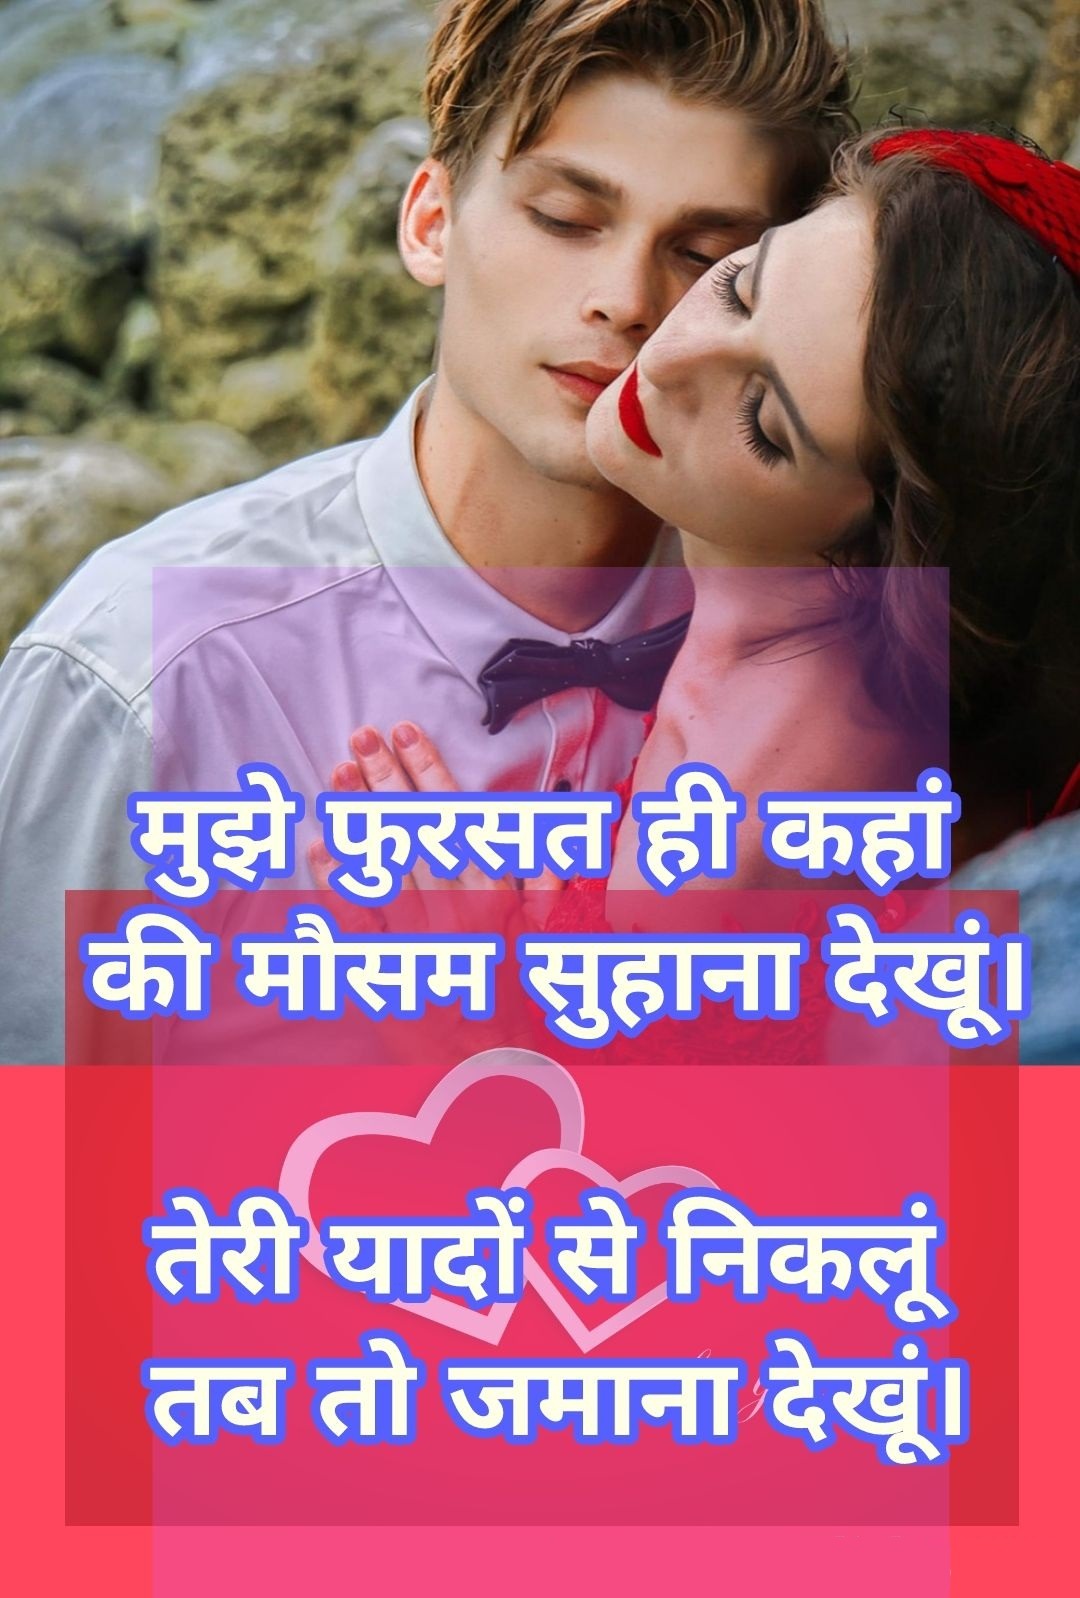 Love Shayari Images In Hindi, Heart Touching Pics Download - Image Diamond